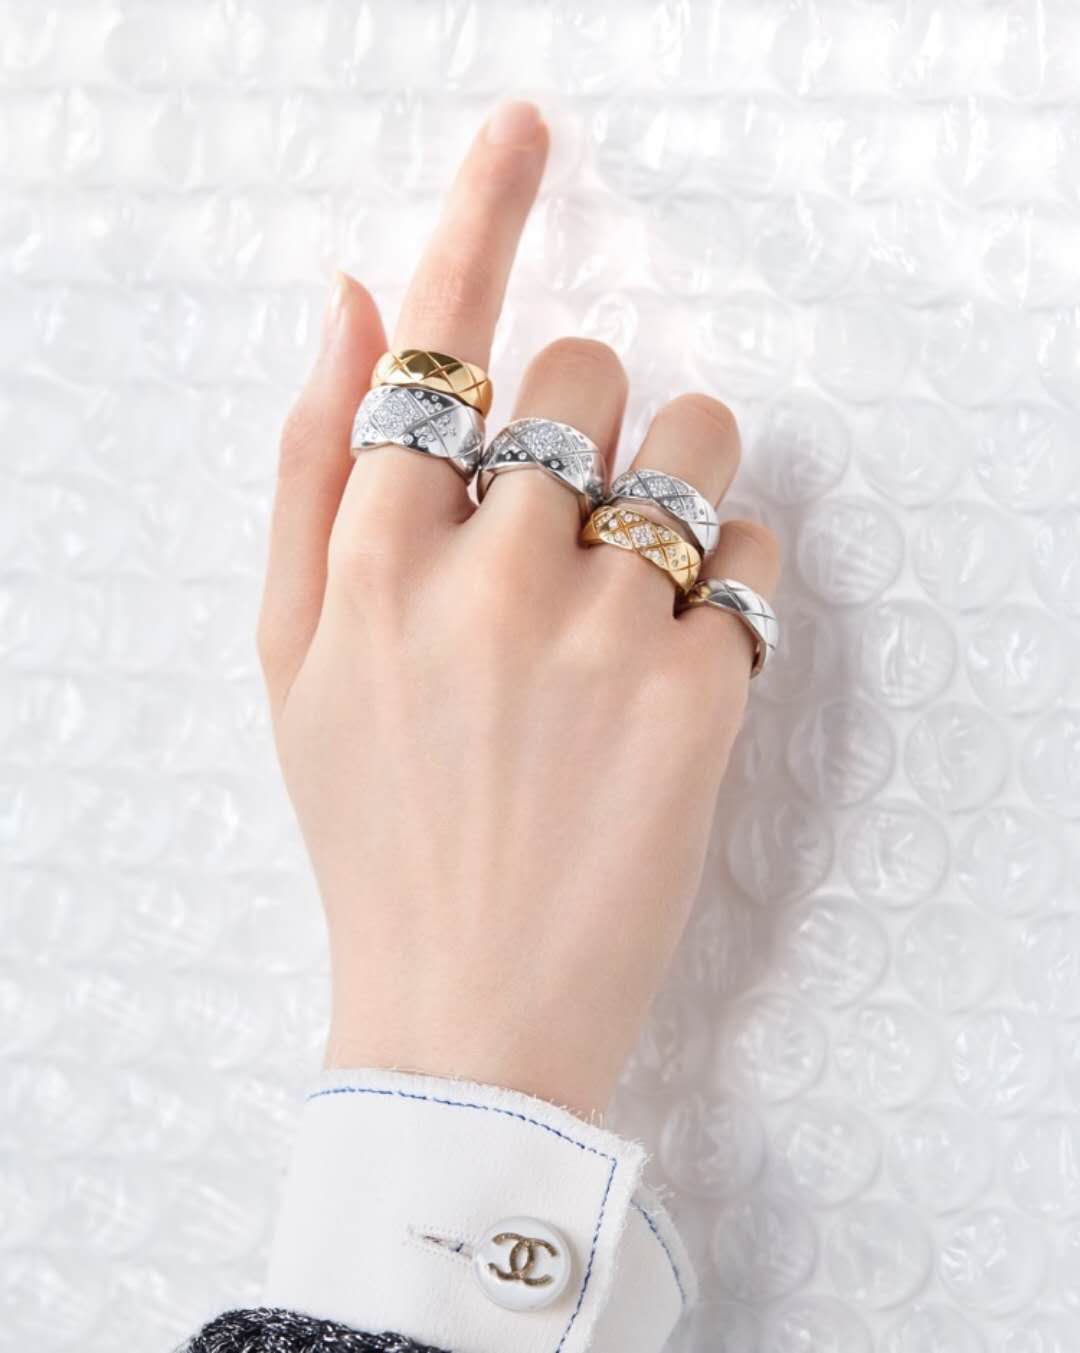 CHANEL 香奈儿 N°5 水晶宝石戒指系列 | iDaily Jewelry · 每日珠宝杂志